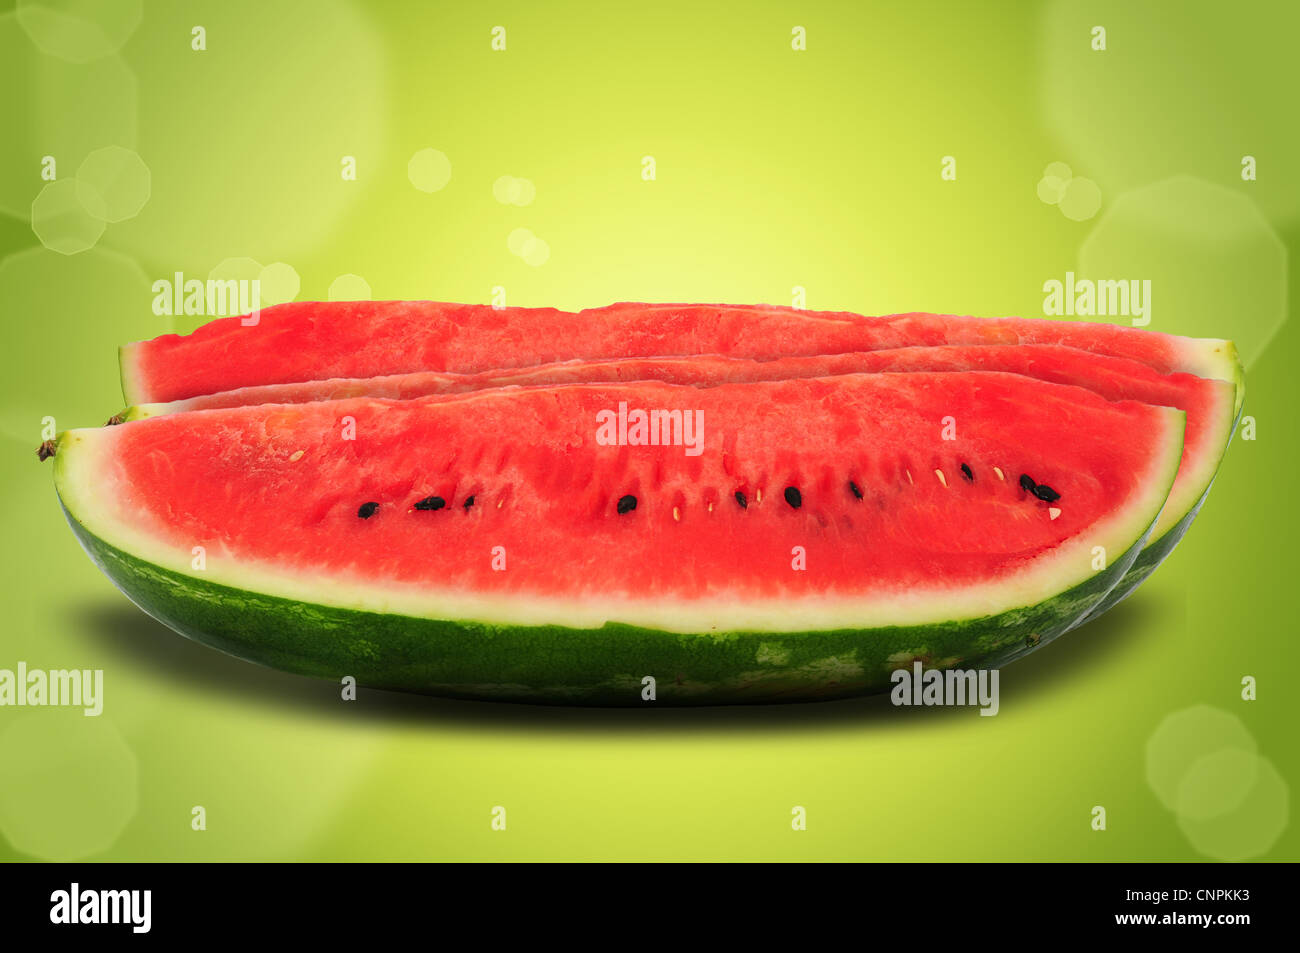 Watermelon slices on green fresh summer background Stock Photo